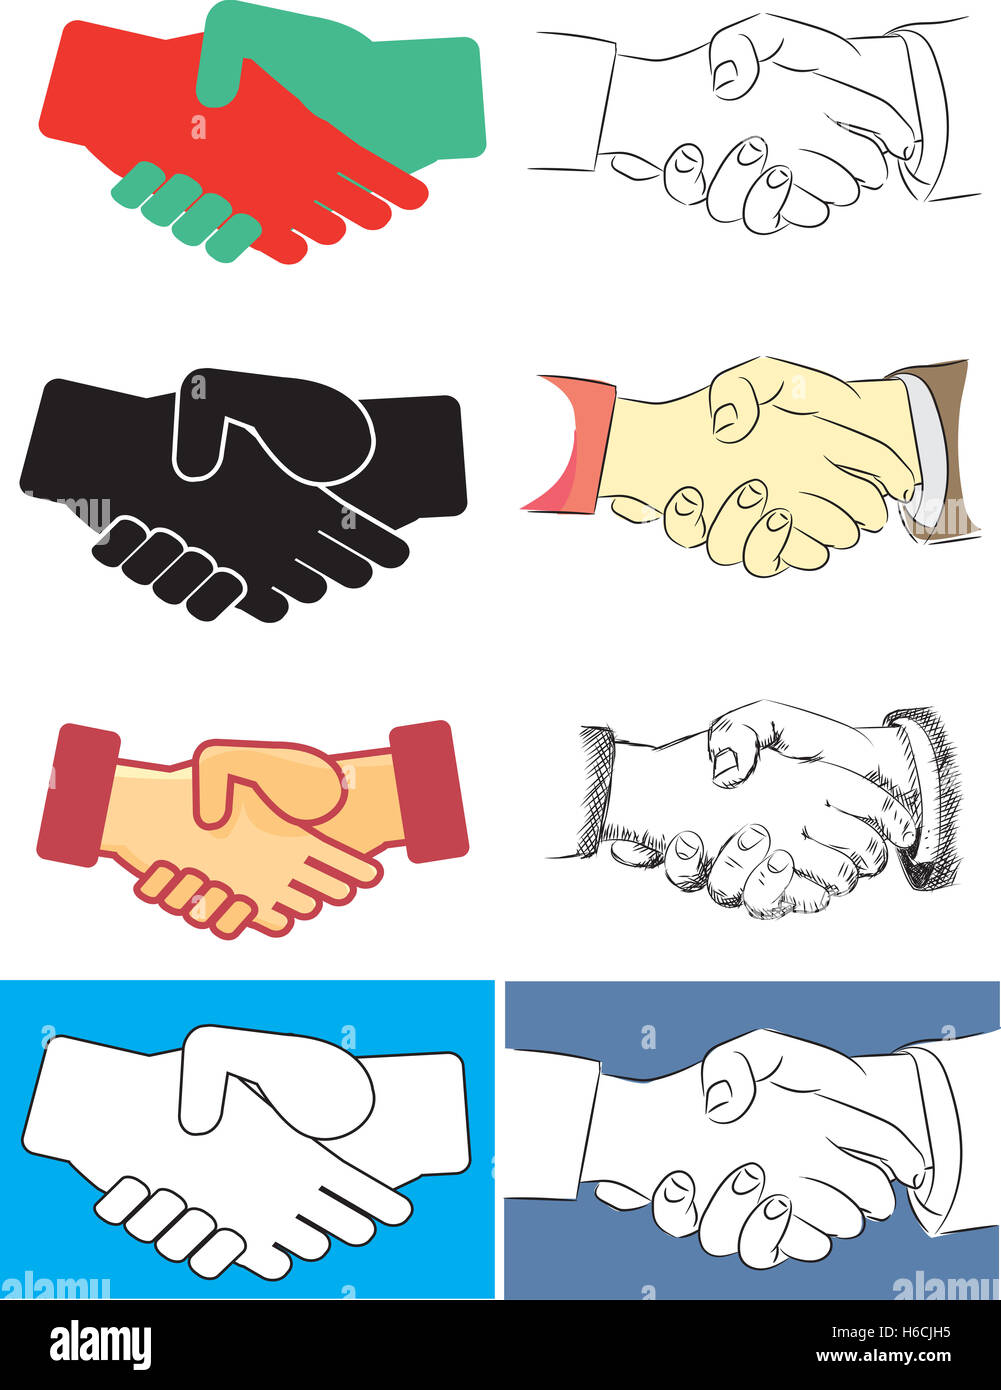 Illustration of handshake, vector illustration Stock Photo - Alamy